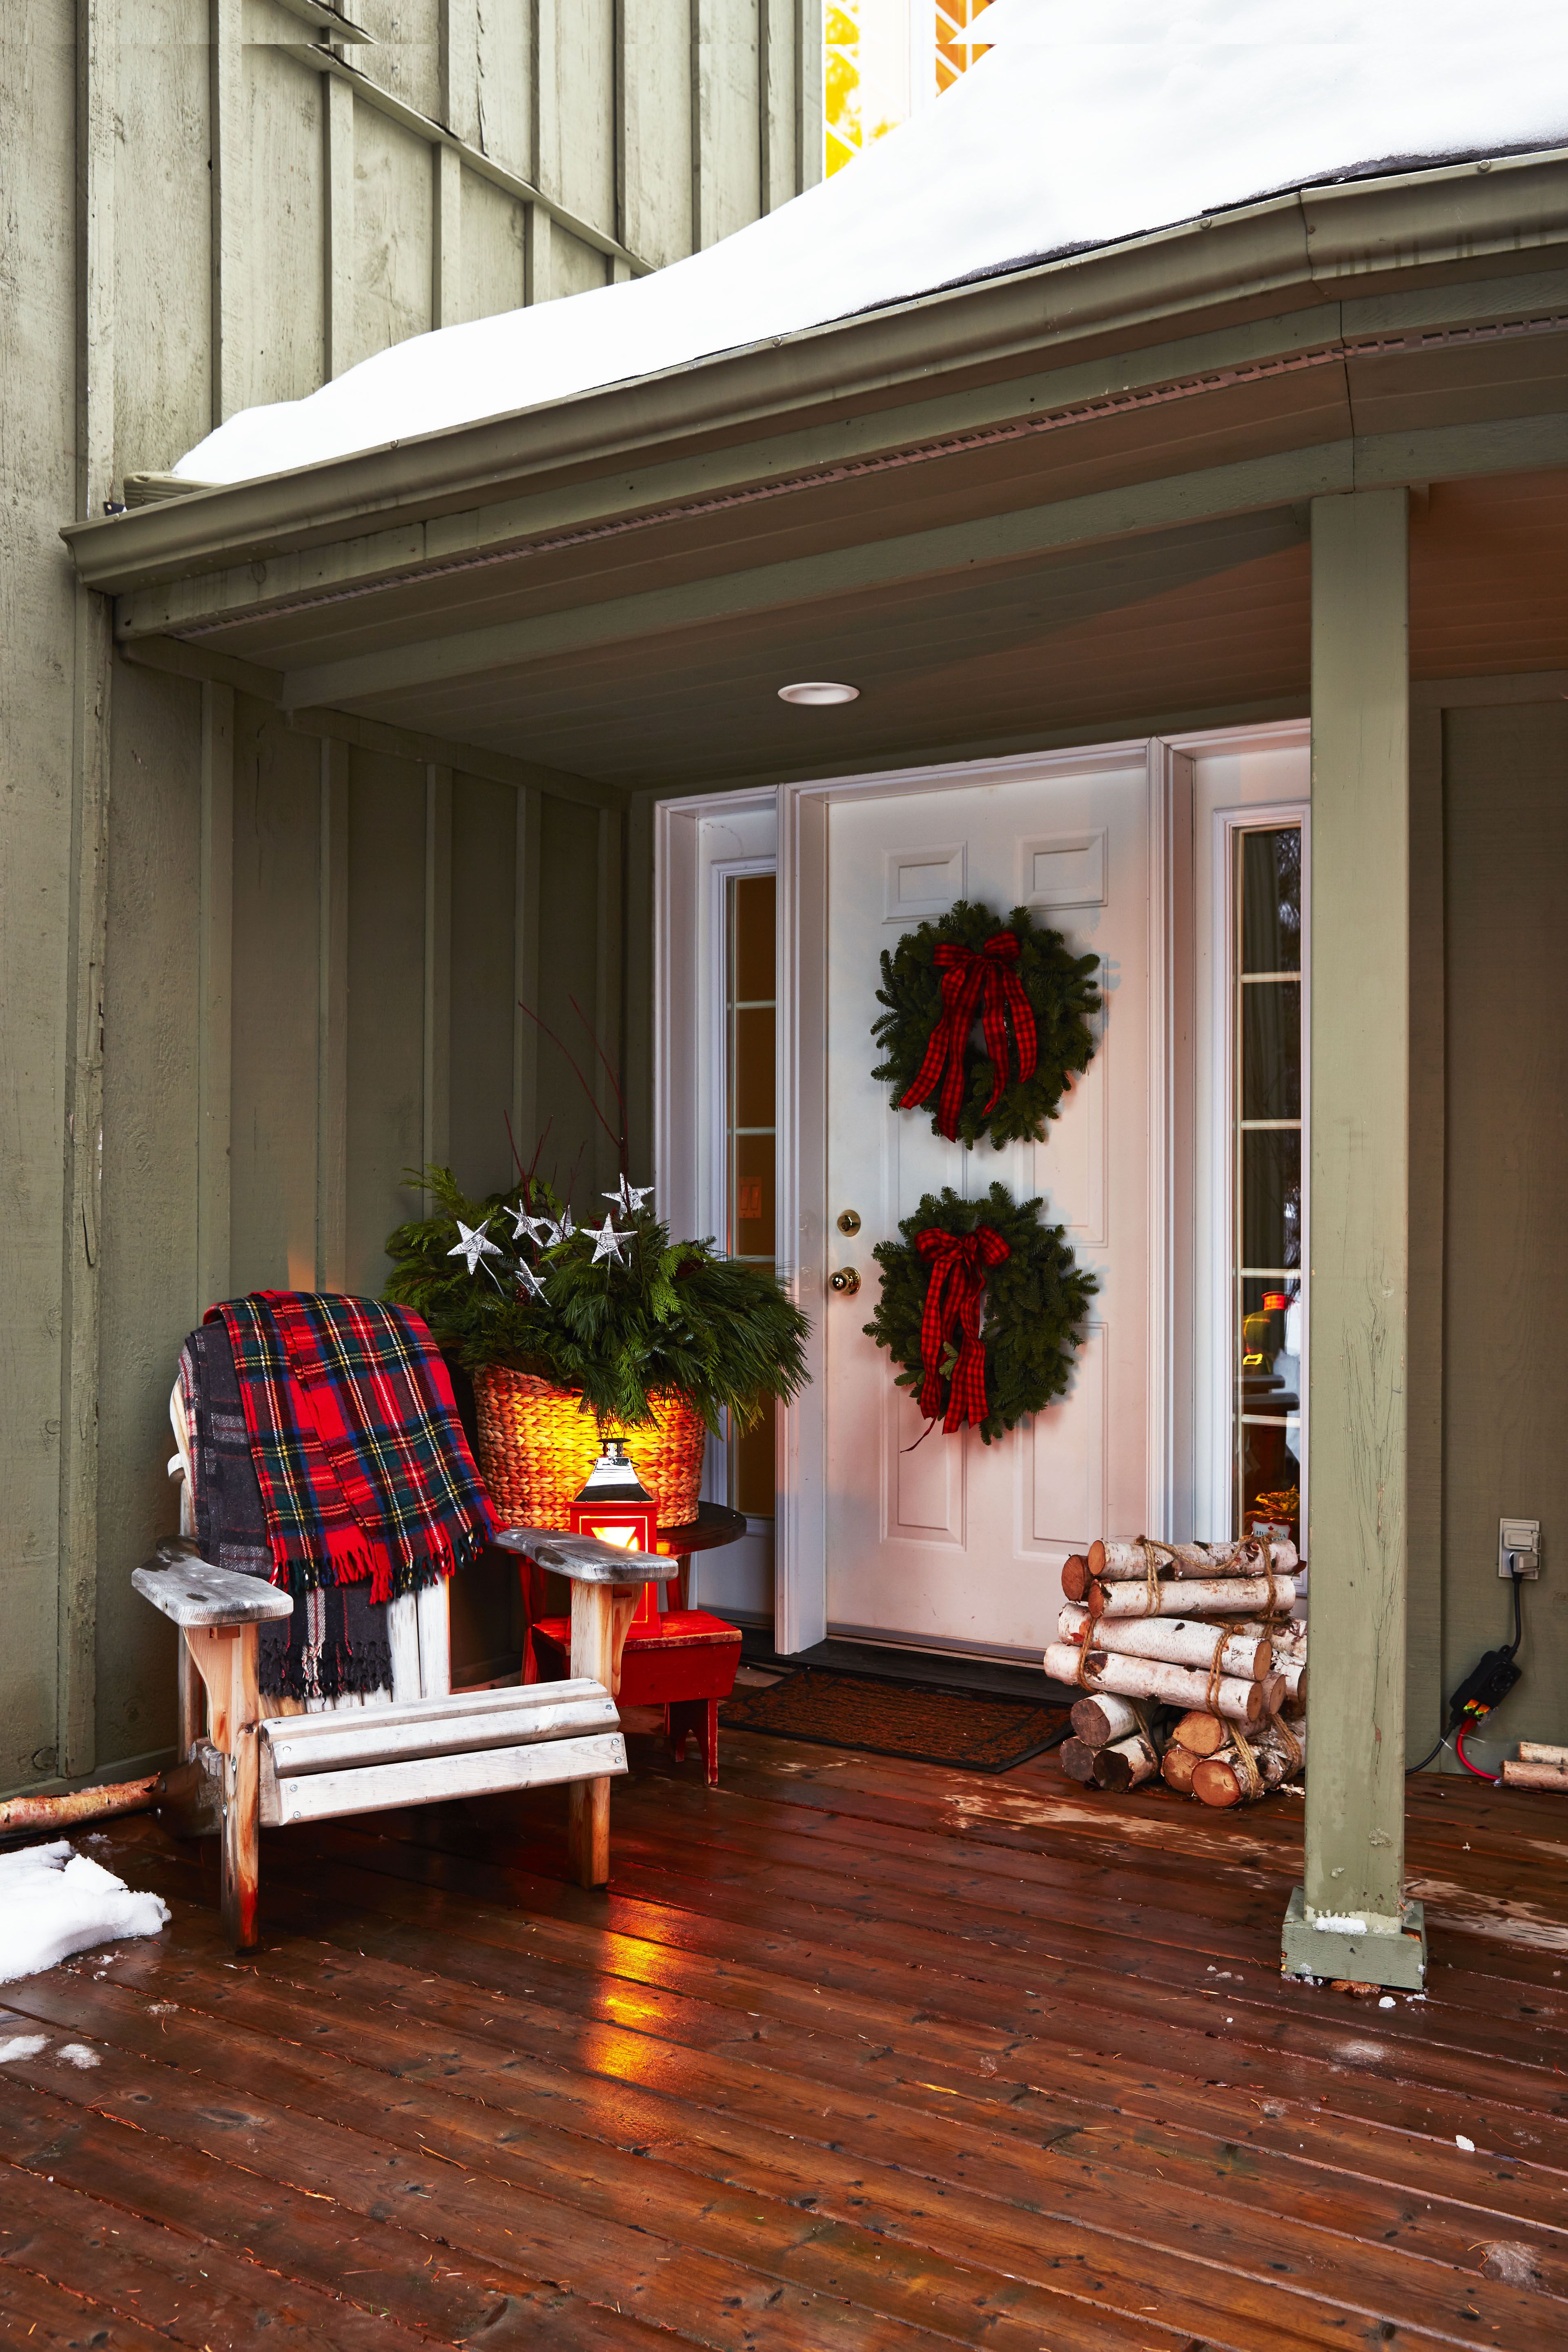 60 Best Diy Christmas Decorations - Easy Homemade Holiday Decor